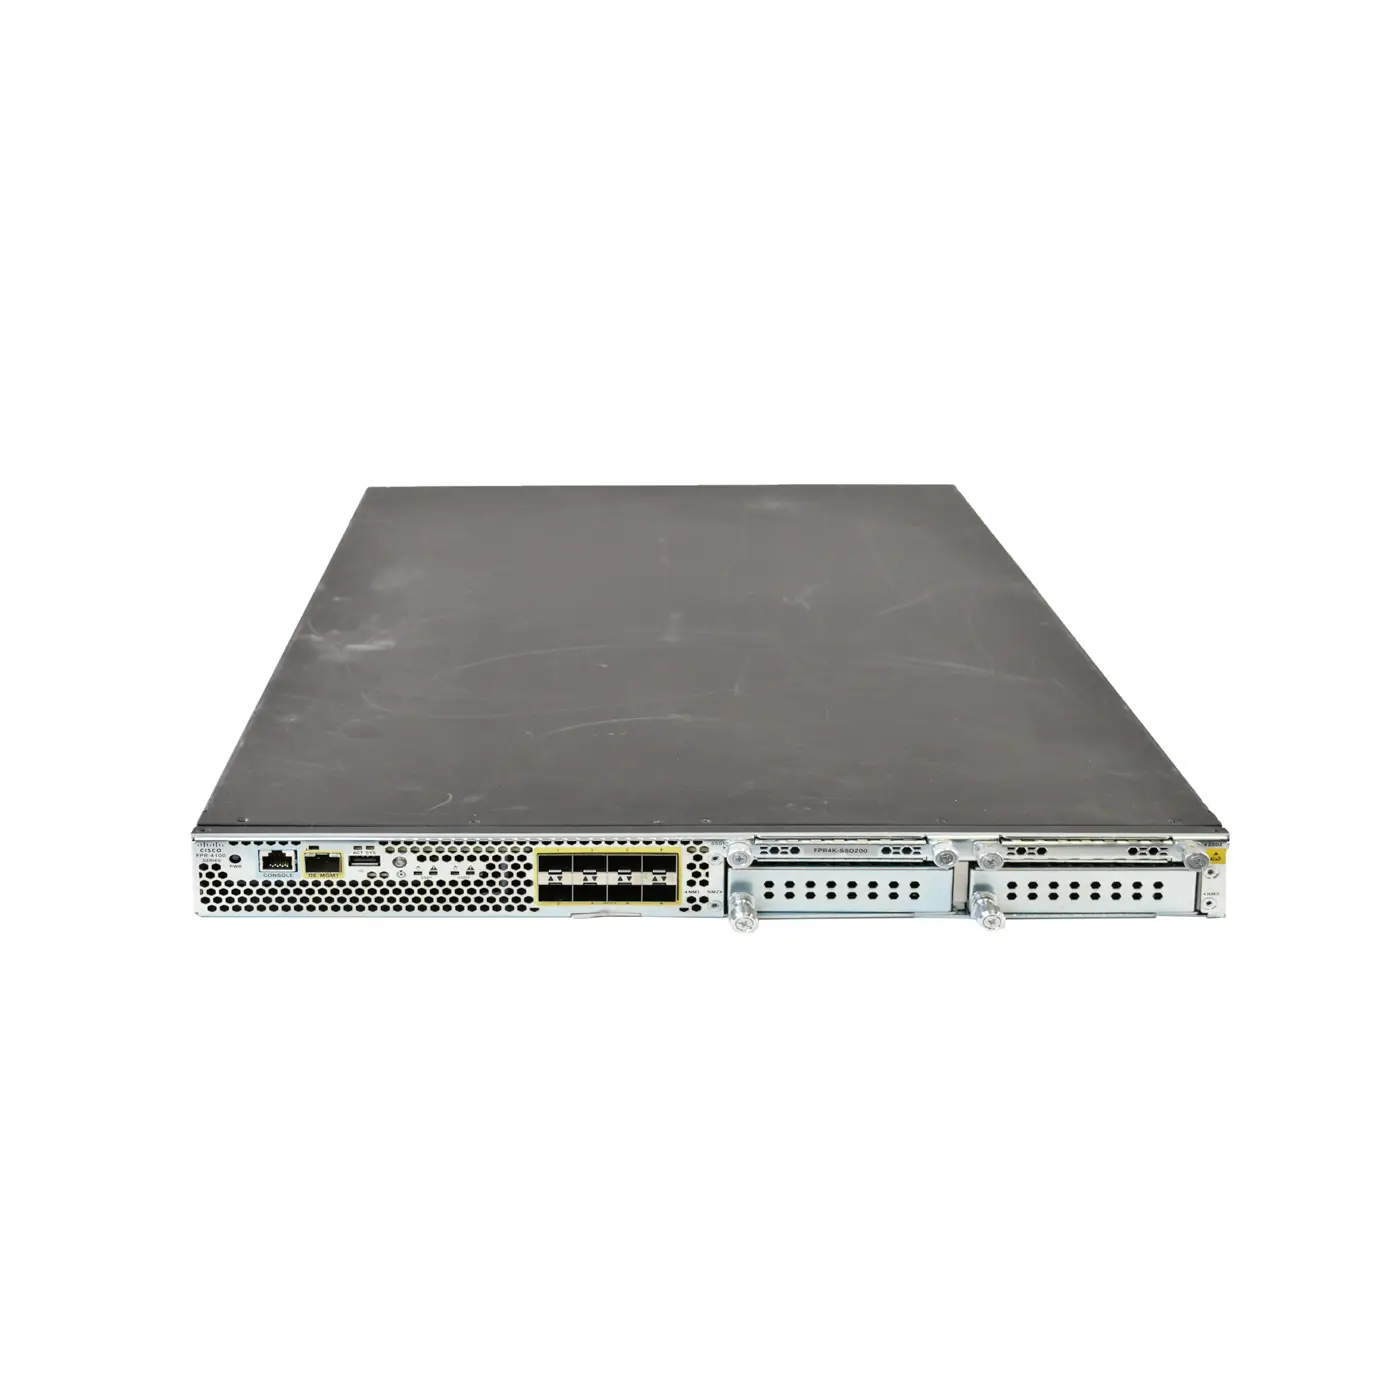 Cisco FPR4110-NGIPS-K9 - Hardware Firewall